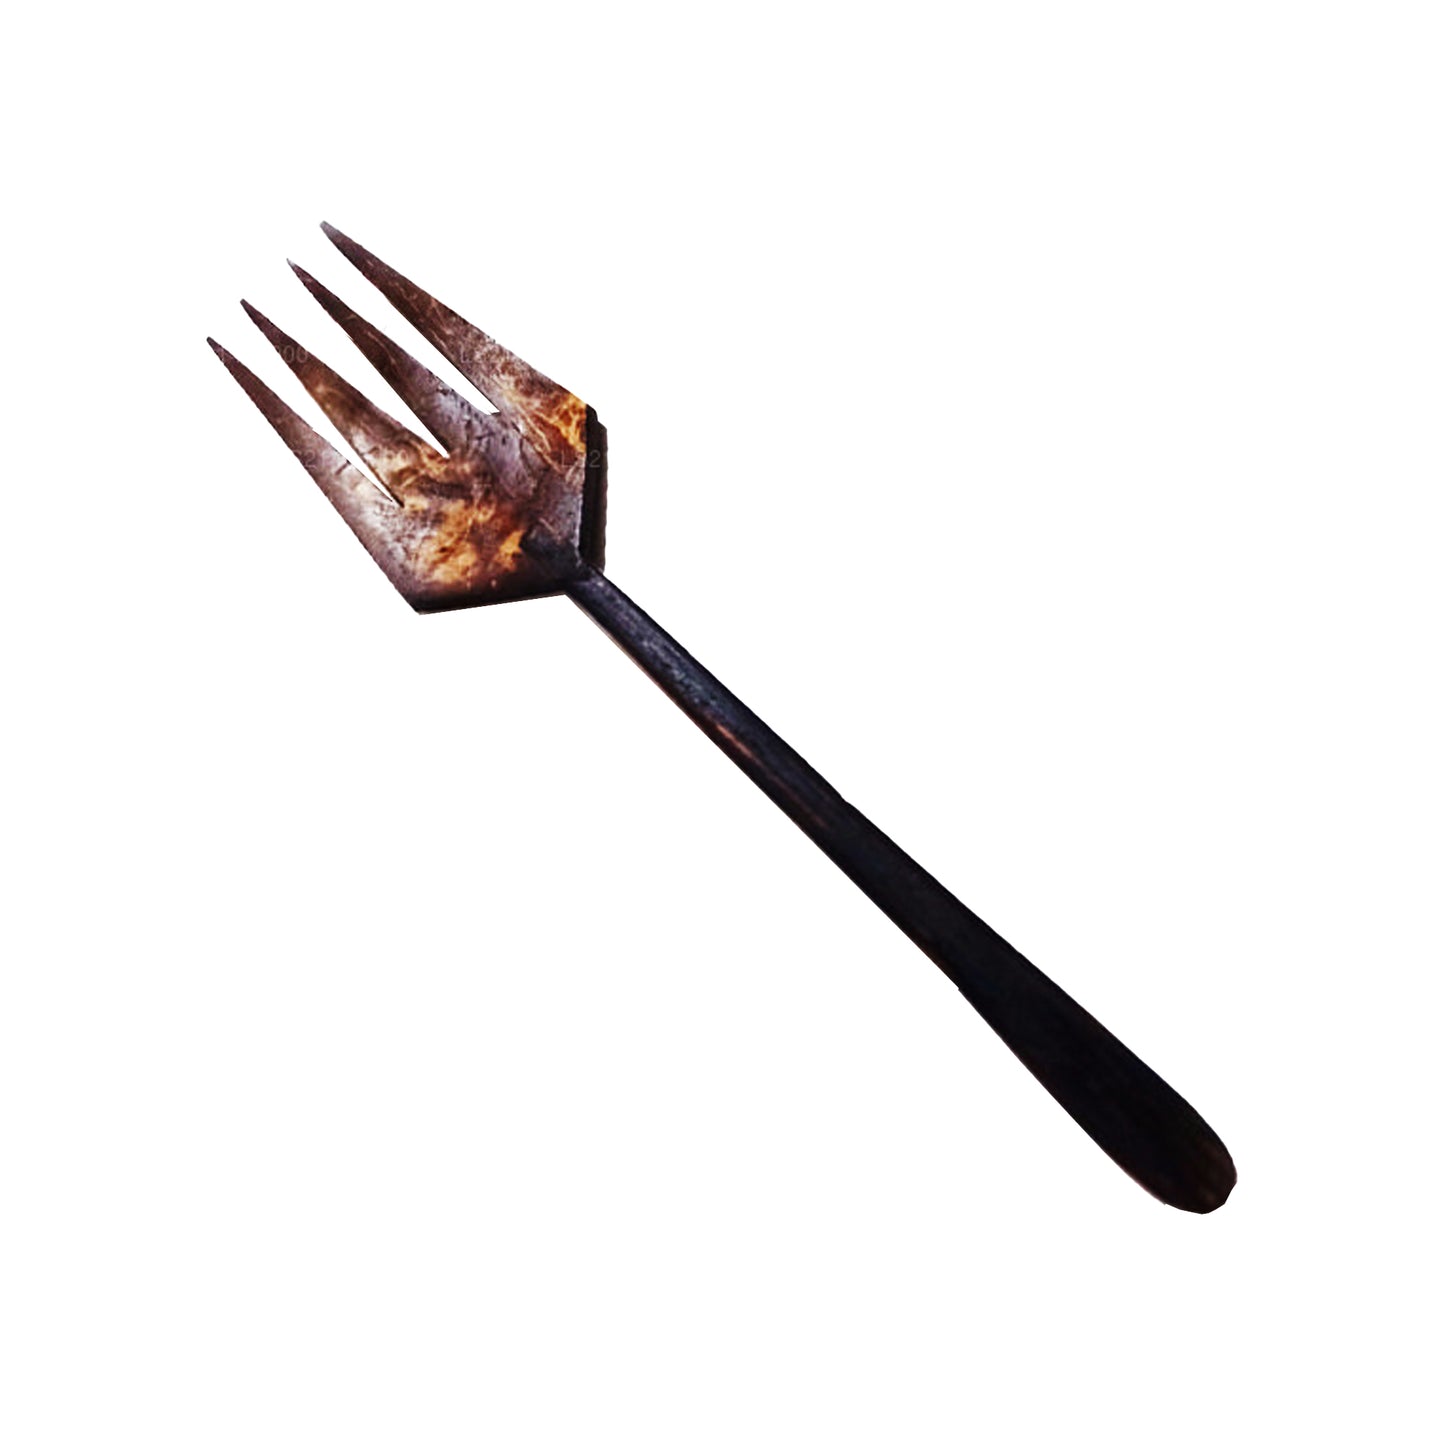 Lakpura Coconut Shell Cutlery "Fork"